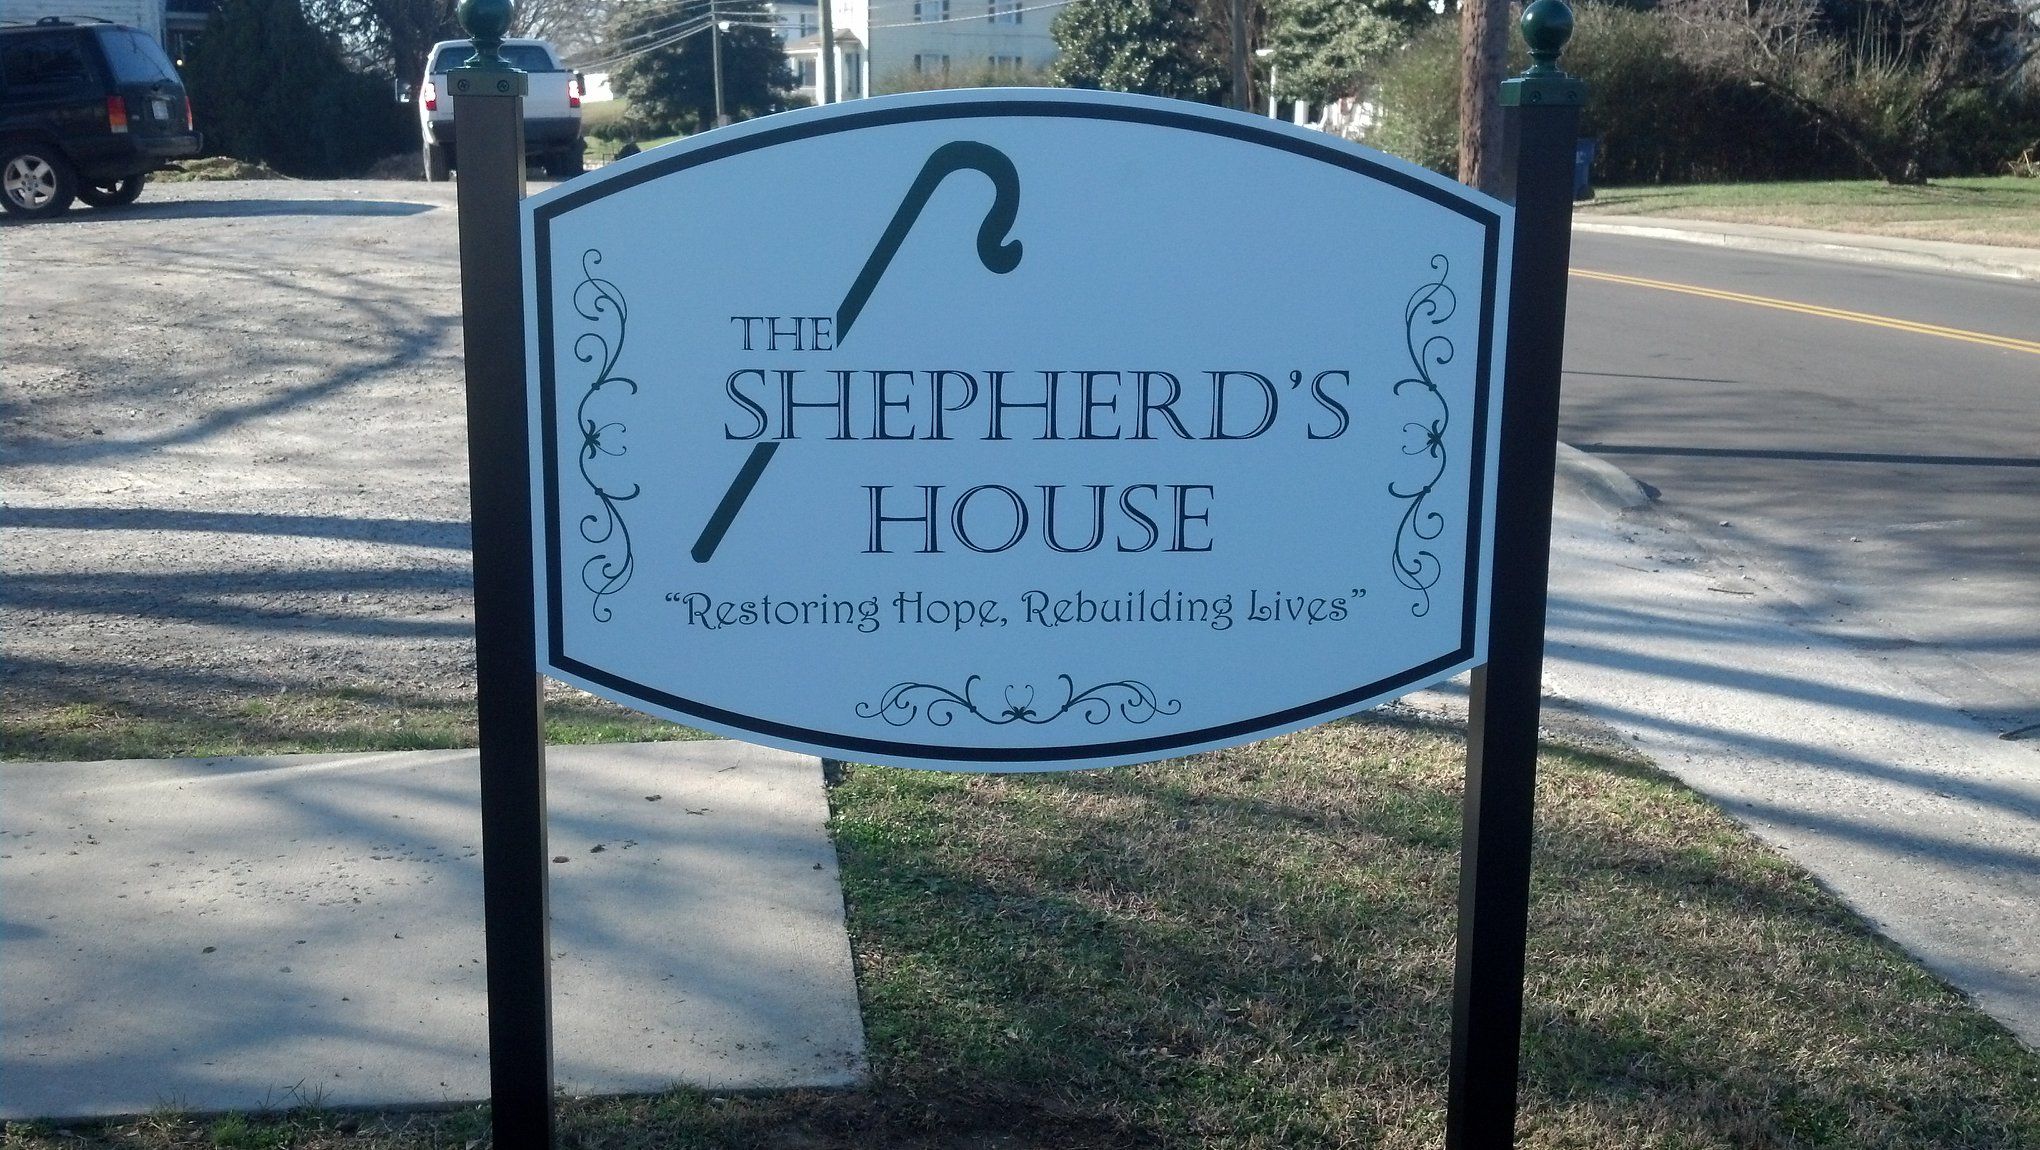 The Shepherd's House